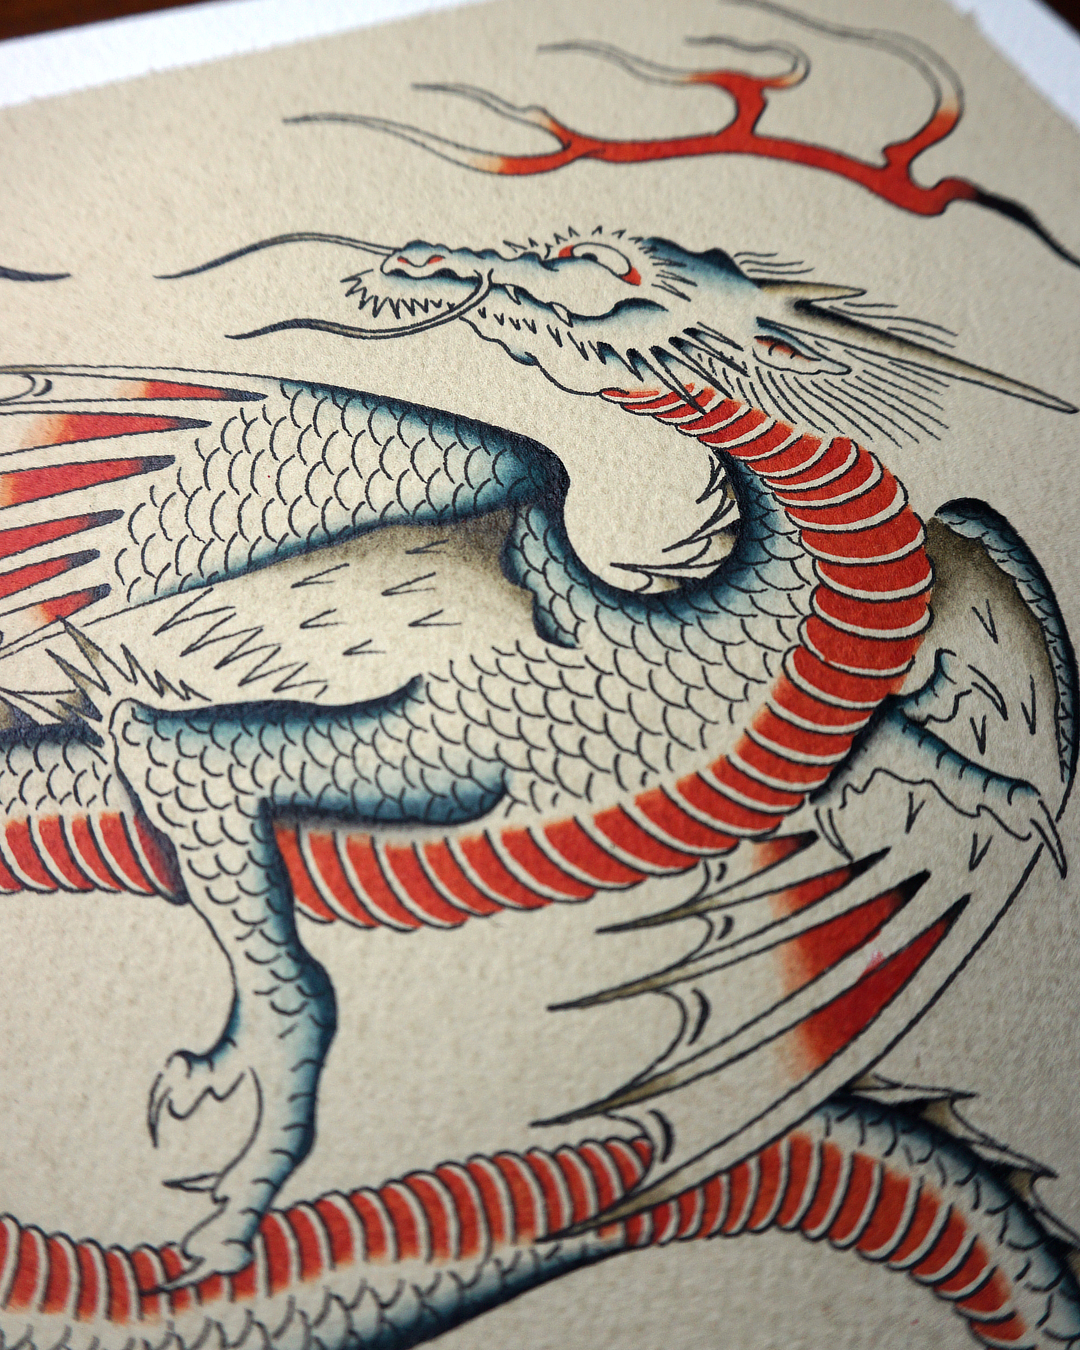 nicolas-trillaud-tatuto-dragon-classic-tattoo-flash-japanese-japonais-antic-oldworkers-oldschool-traditional-tatouage-bordeaux-detail-2